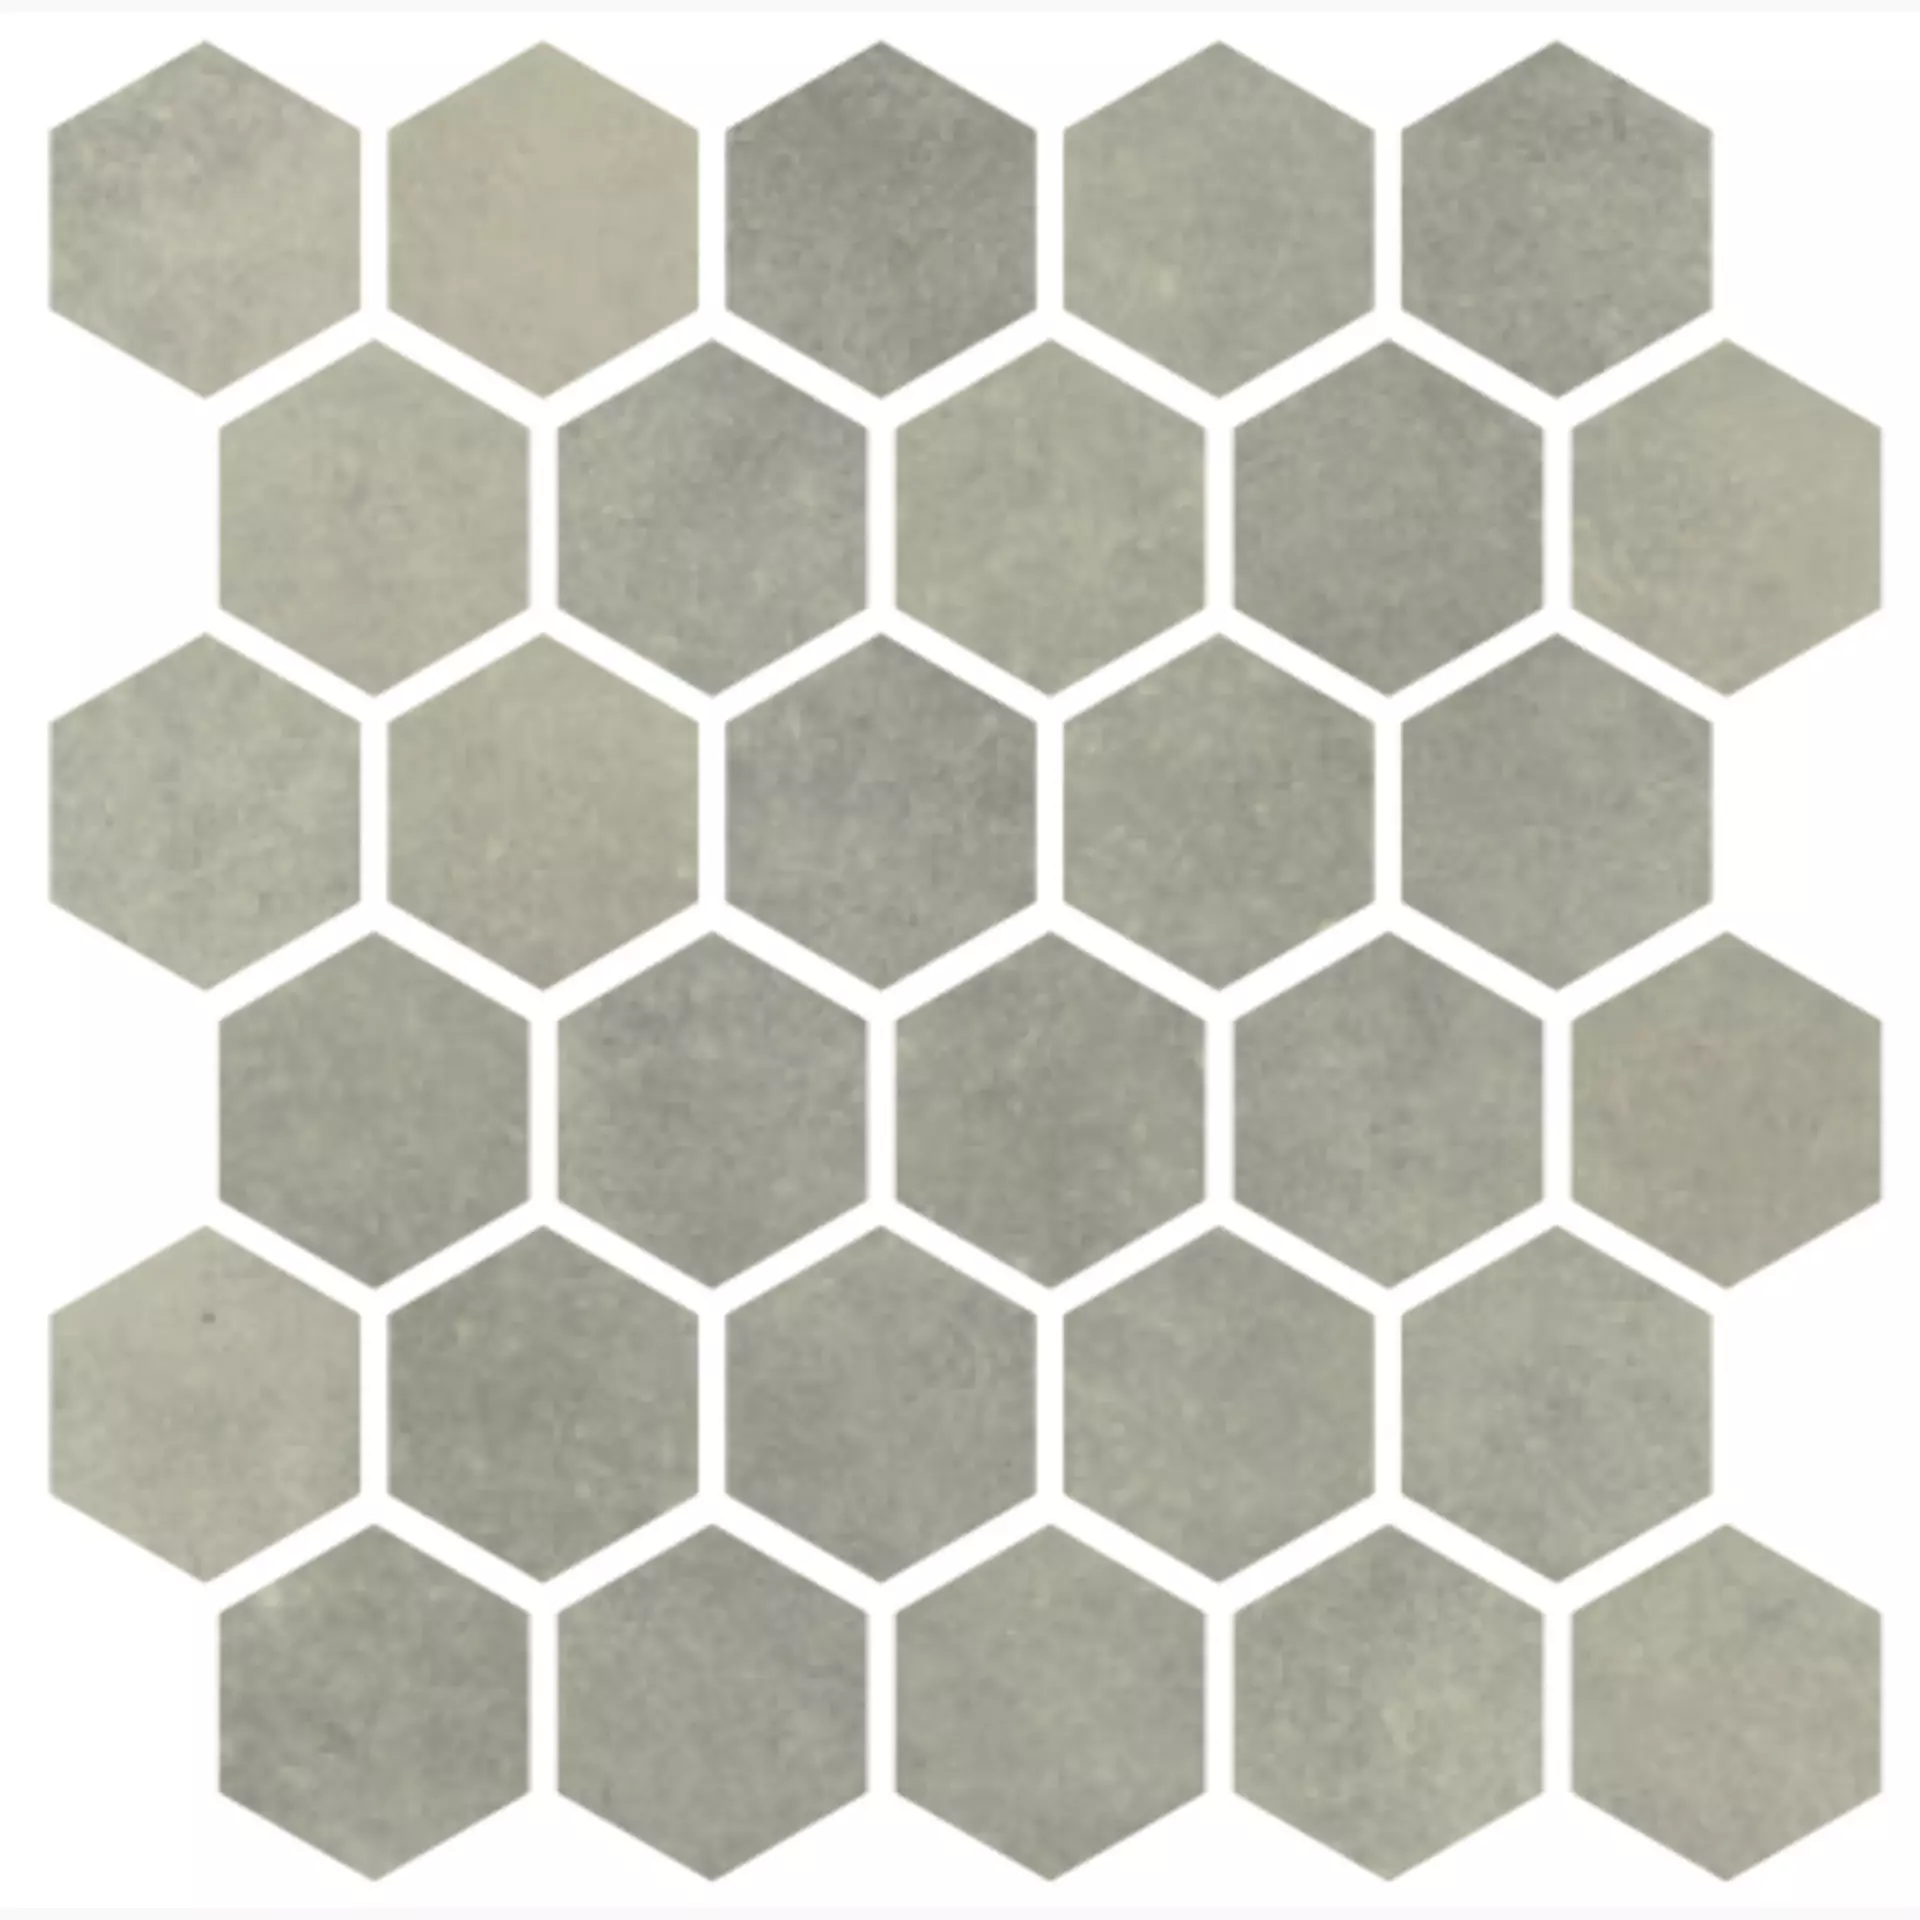 CIR Materia Prima Soft Mint Naturale Mosaik Hexagon 1069918 27x27cm